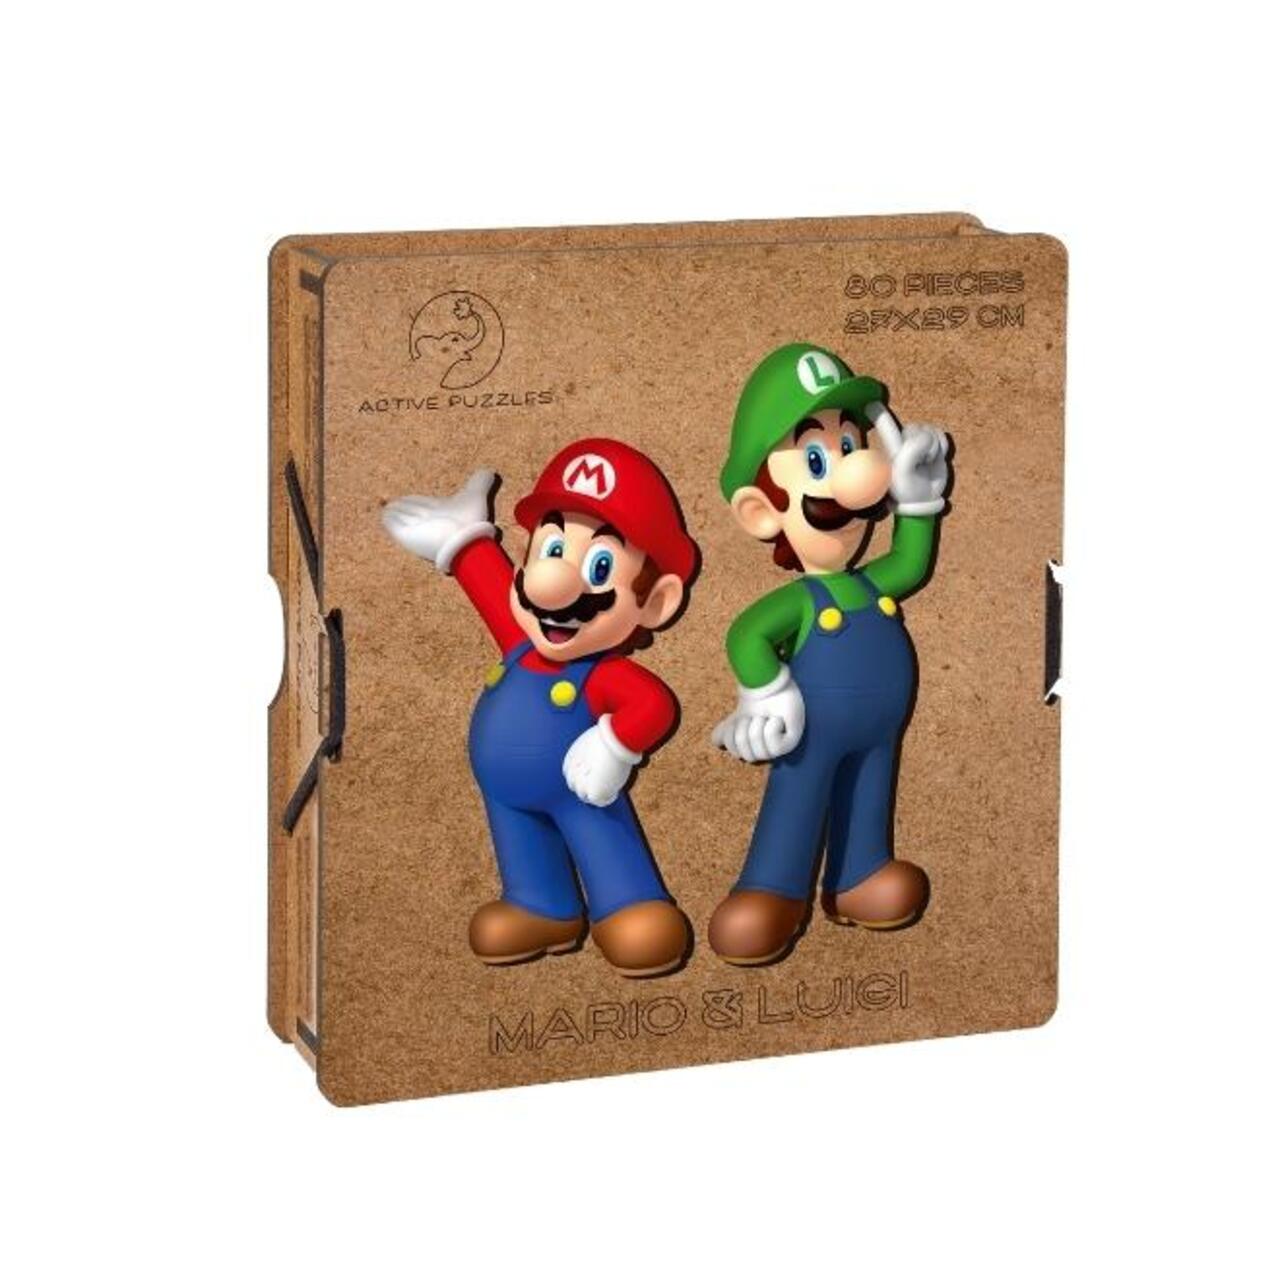 Mario & Luigi Wooden Puzzle box view